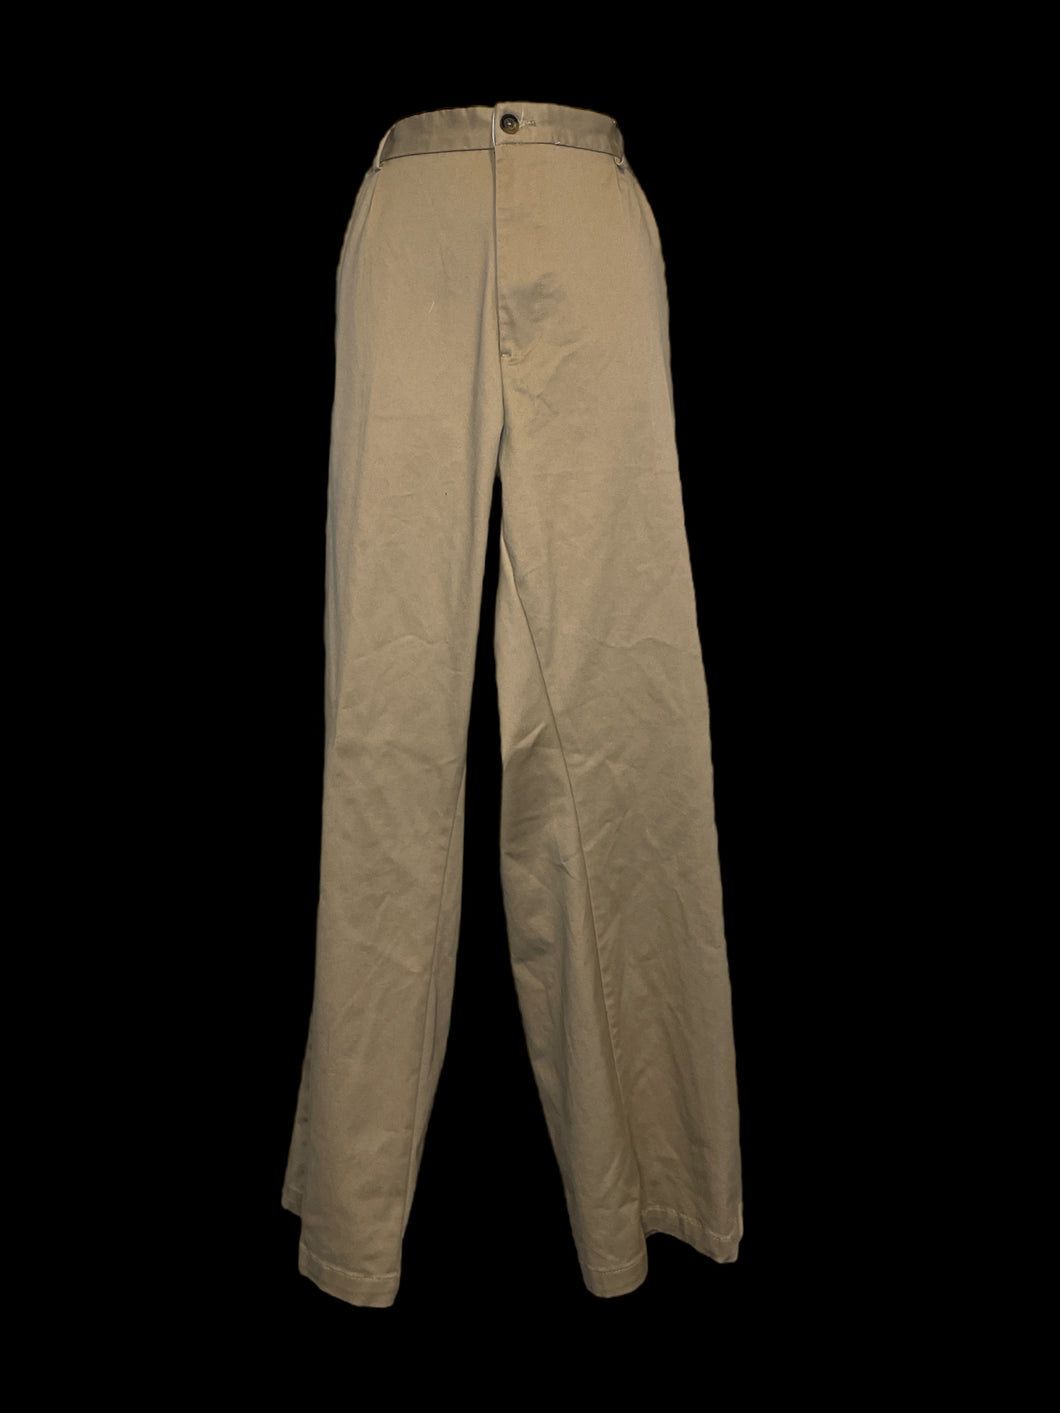 2X Beige khaki pants w/ belt loops, pockets, & zipper/button closure